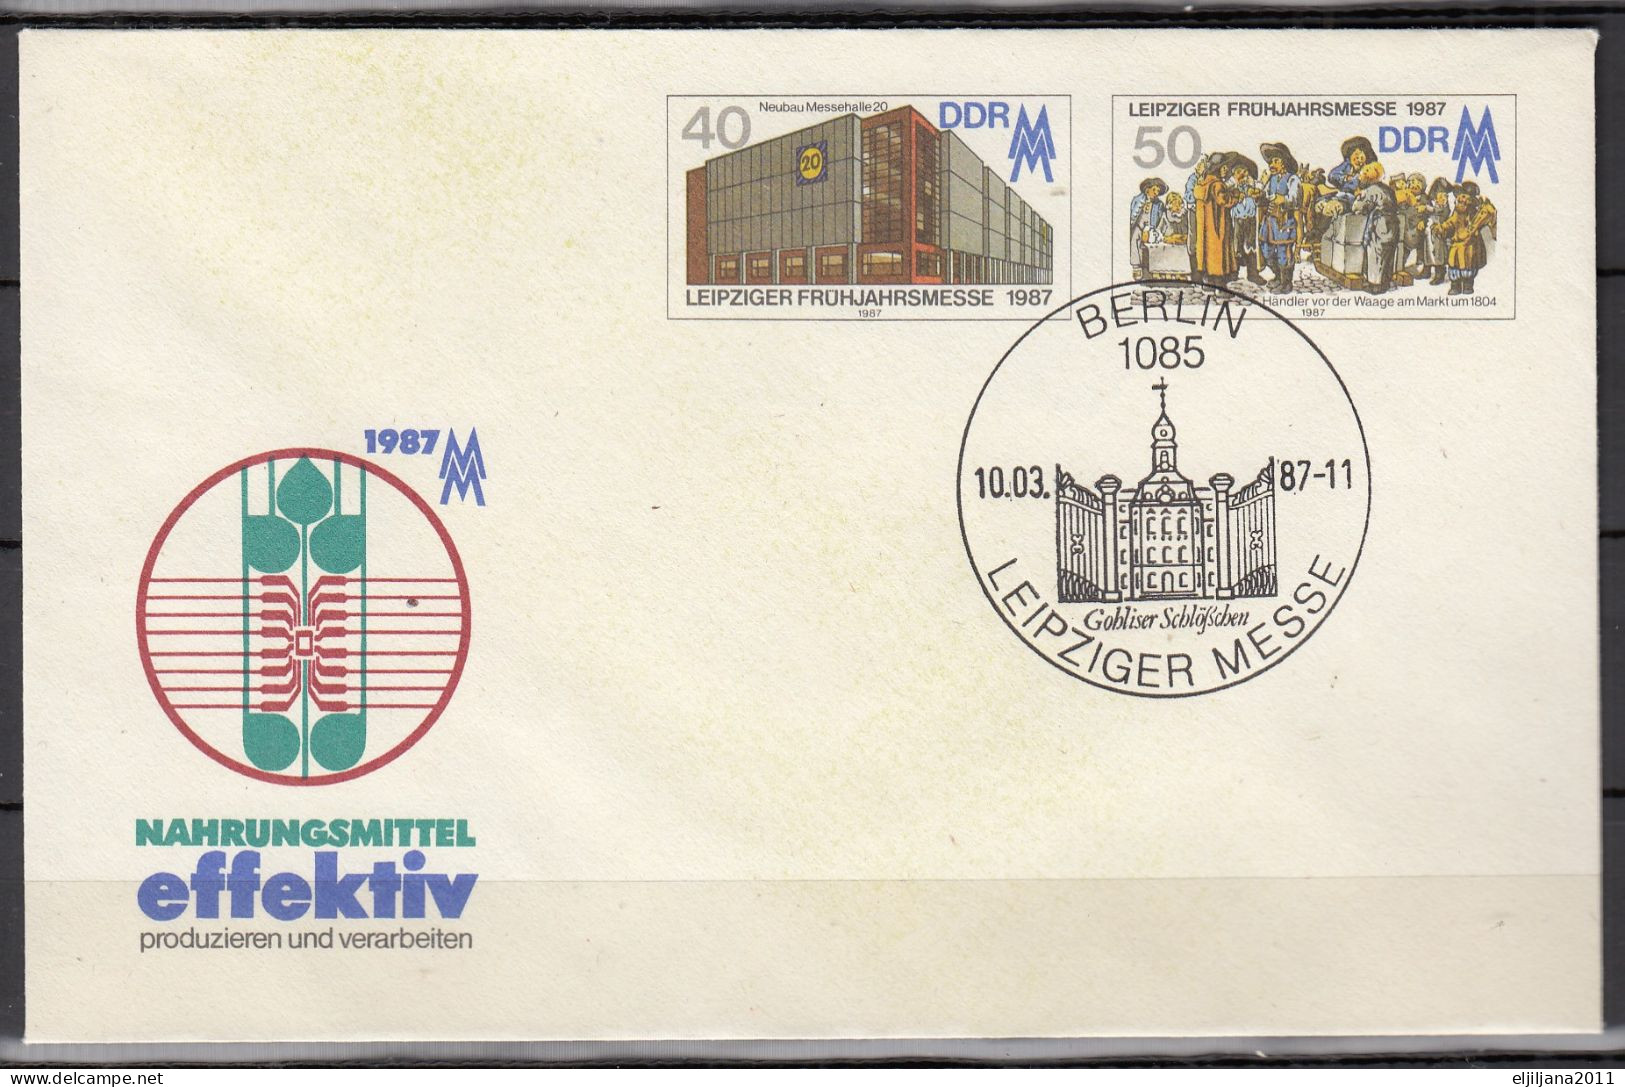 ⁕ Germany DDR 1987 ⁕ "effektiv" - Leipziger Frühjahrsmesse / Postal Stationery ⁕ 2v Unused Cover - Umschläge - Ungebraucht